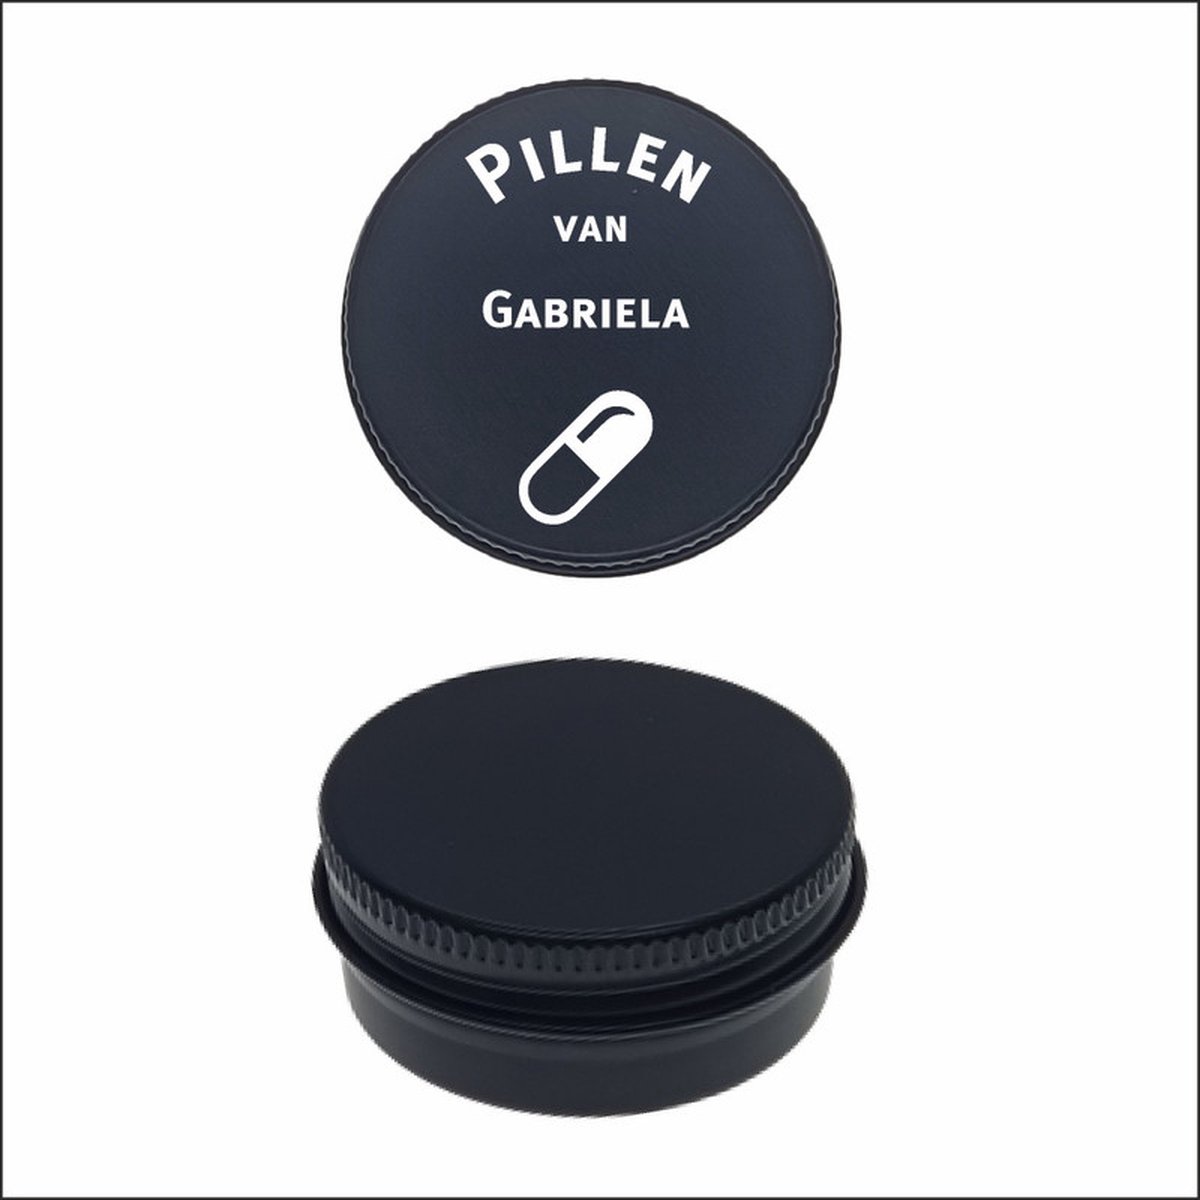 Pillen Blikje Met Naam Gravering - Gabriela